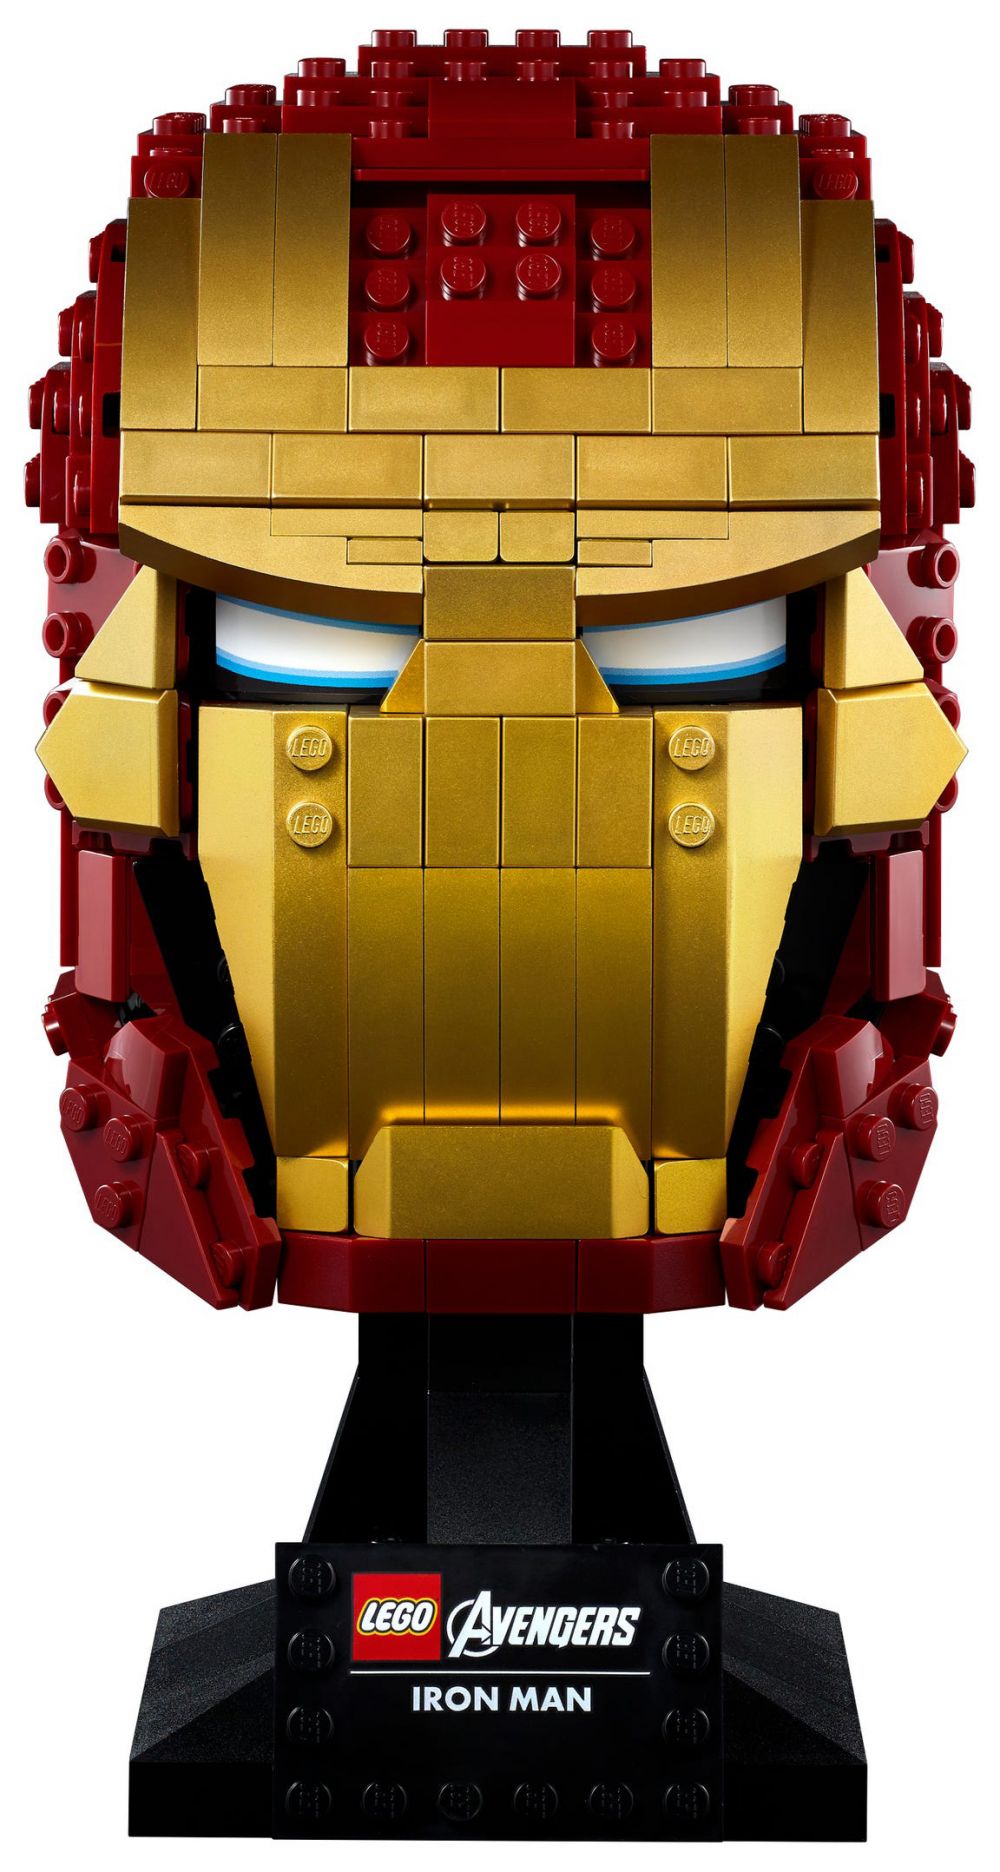 LEGO Marvel 76165 pas cher, Casque d'Iron Man